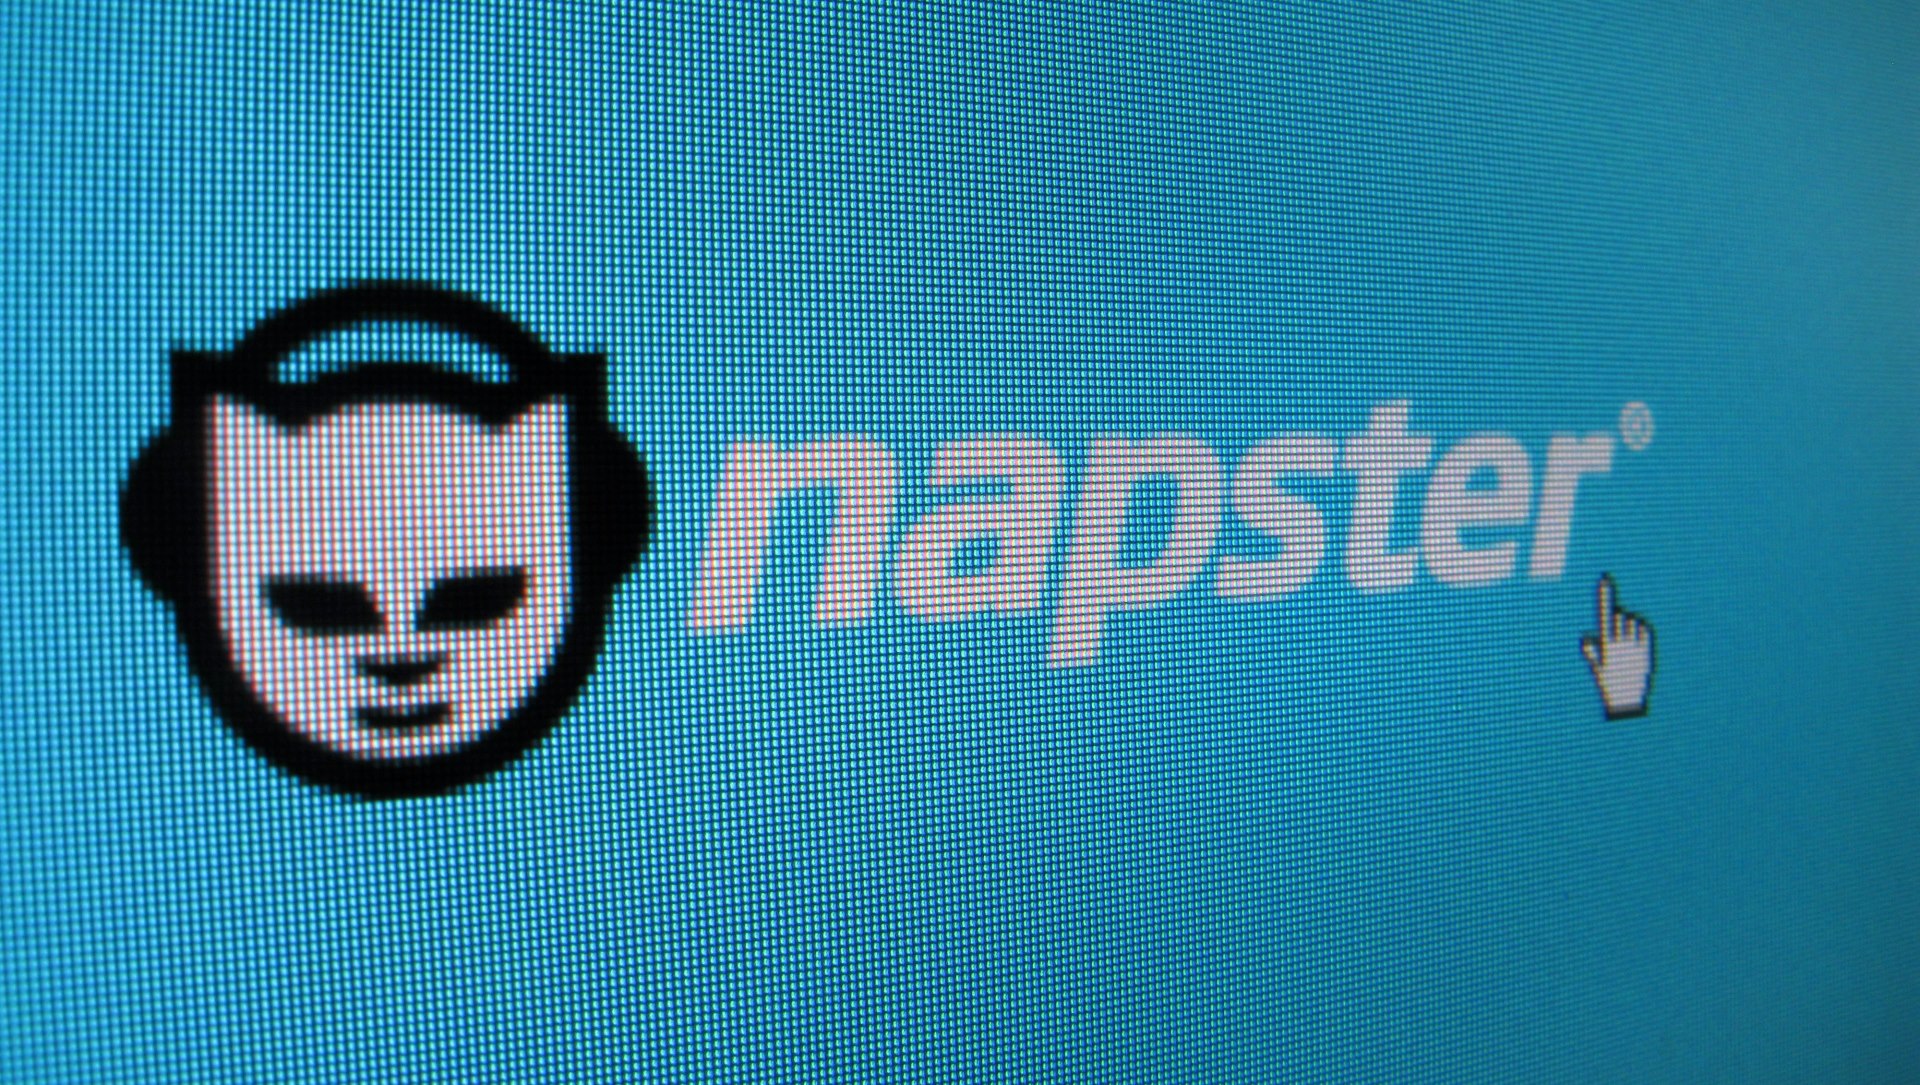 Napster making US comeback